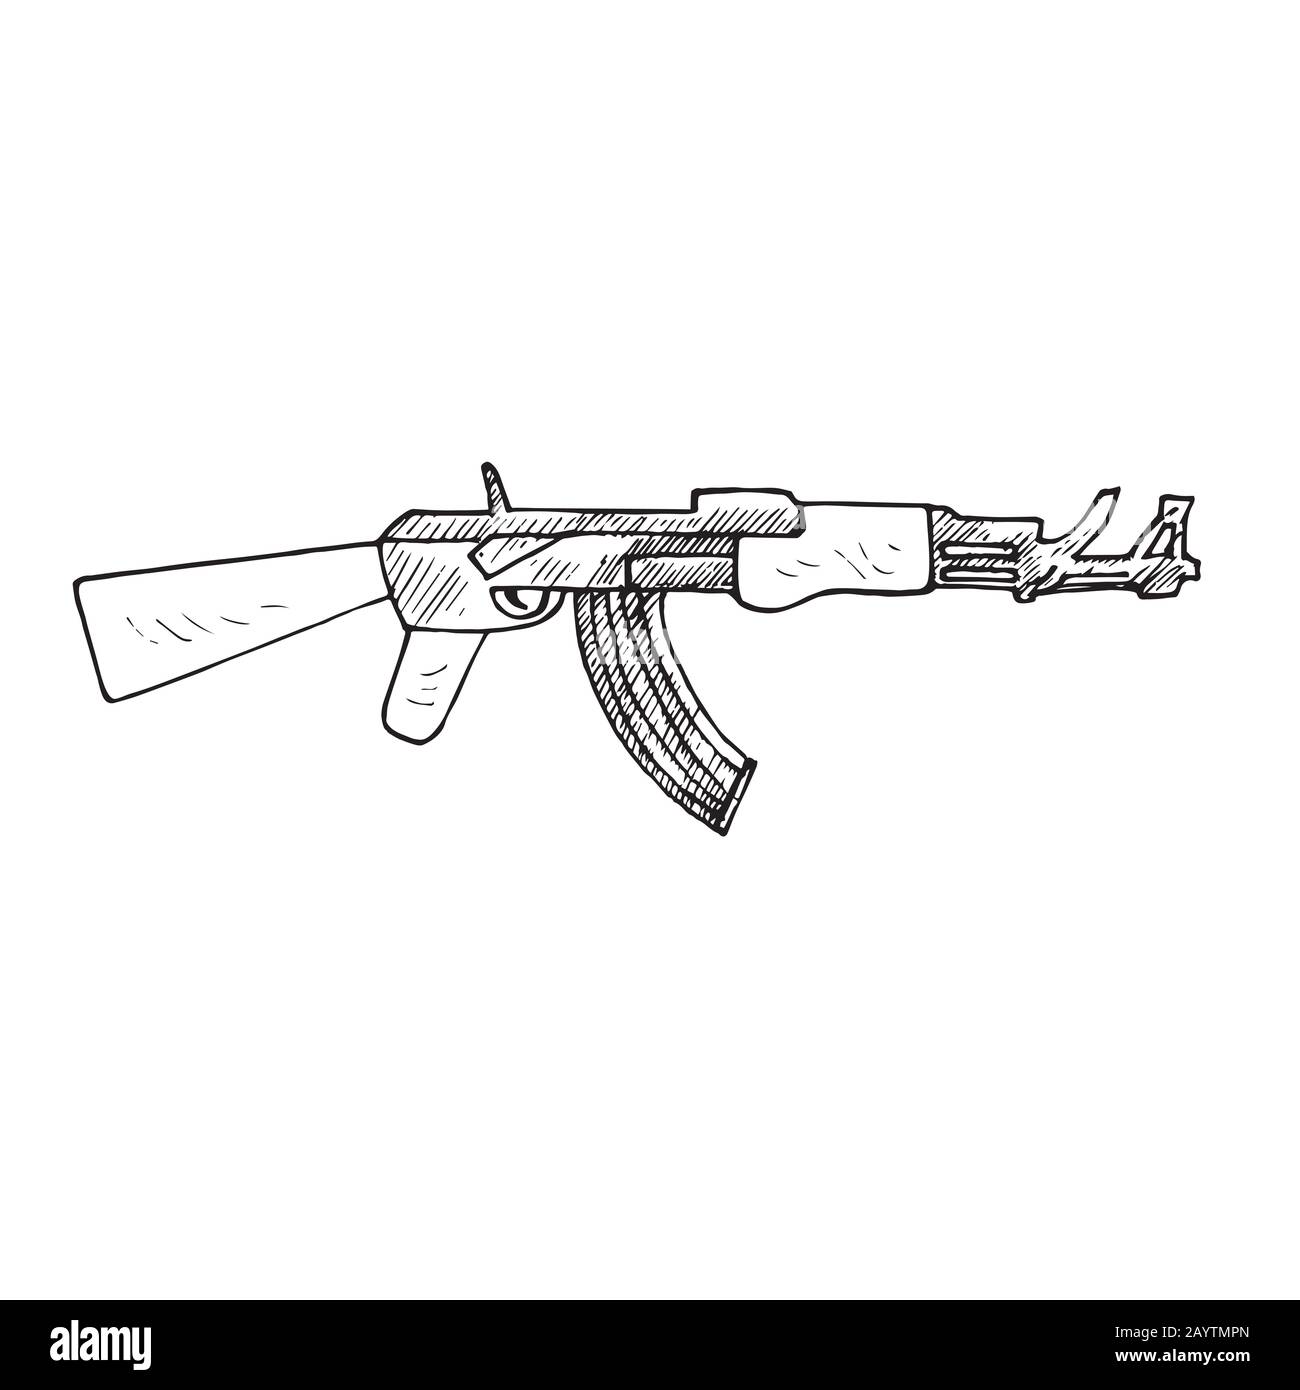 Download this stock image: The AK-47, or AK (Kalashnikov rifle), hand drawn doodl...